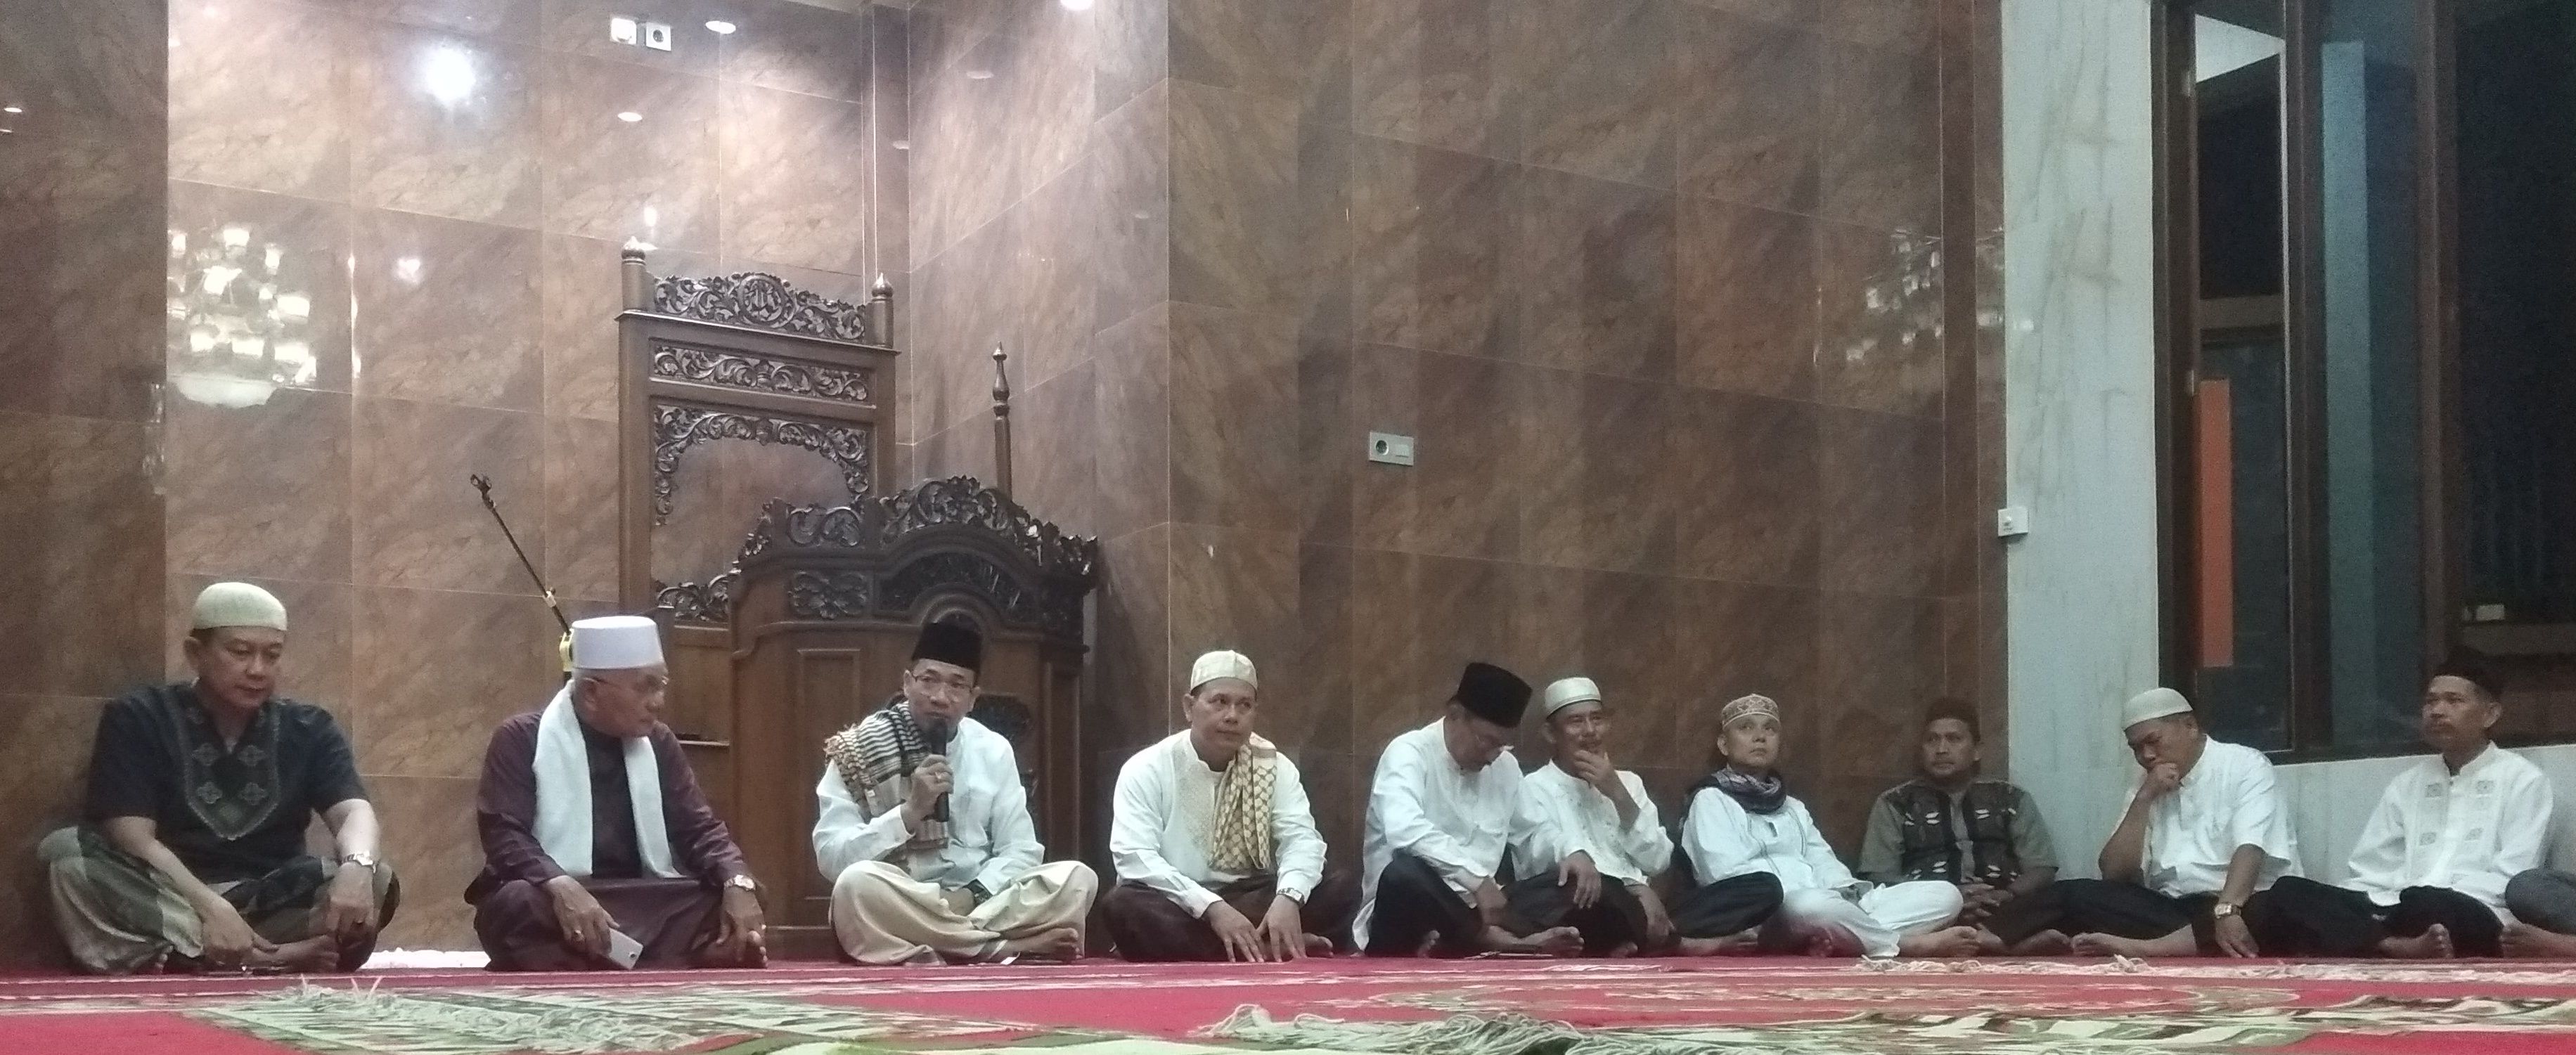 Pengajian disalah satu masjid. foto : rappiblog